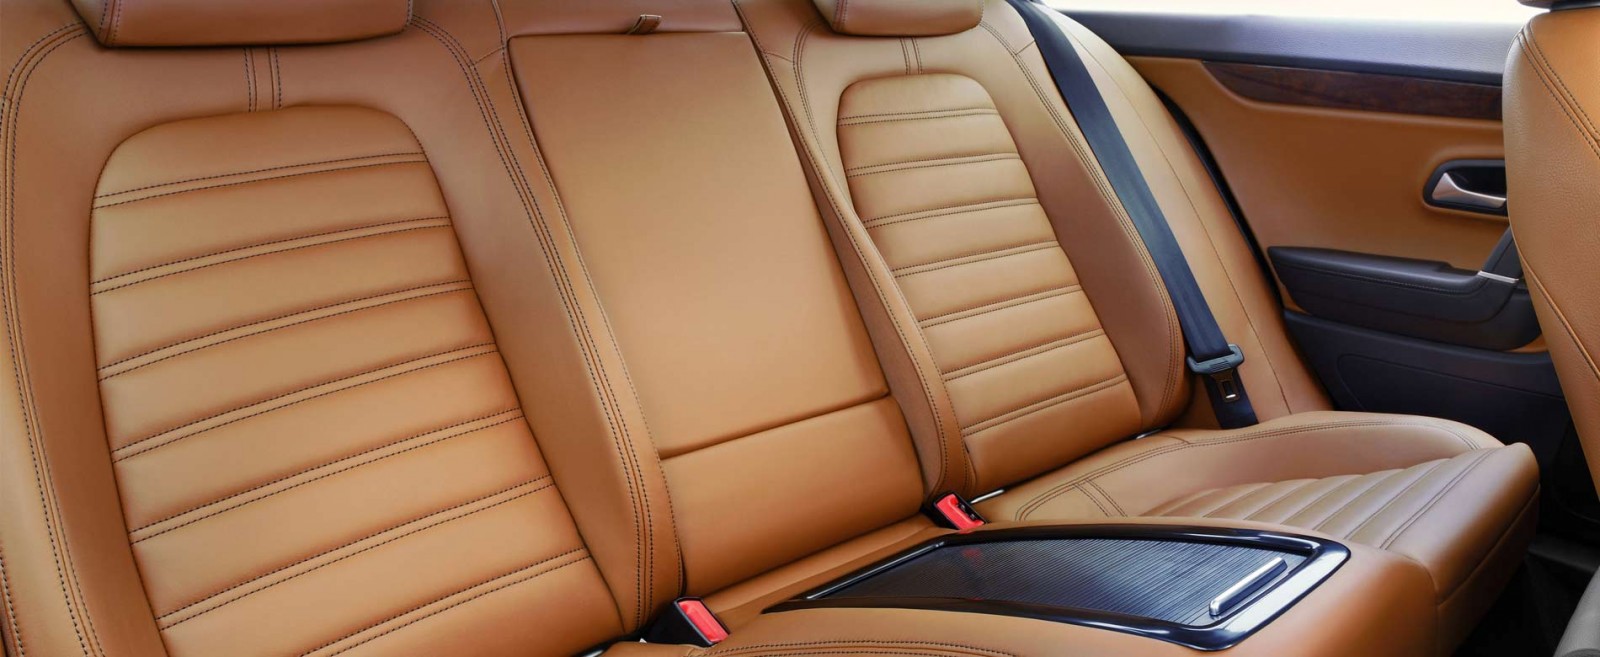 restore leather seats